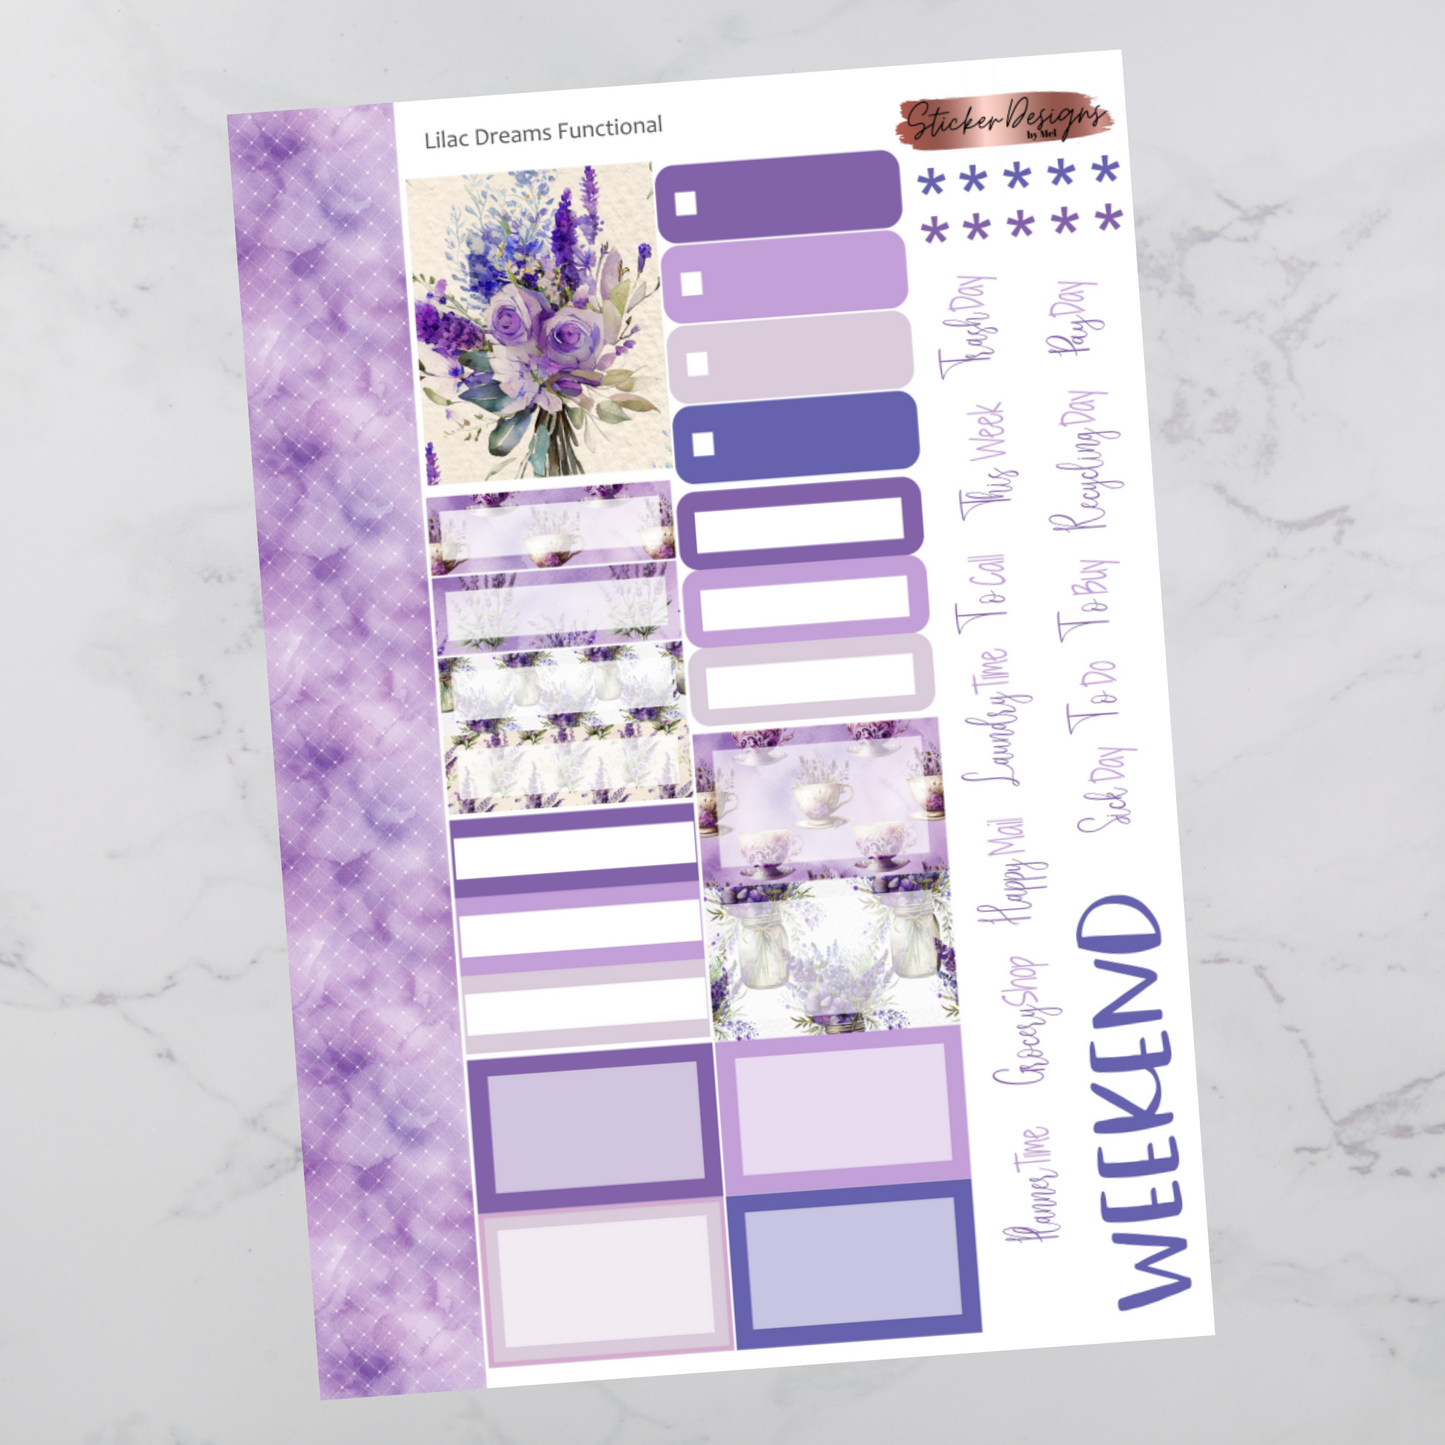 Lilac Dreams - Functional Sheet